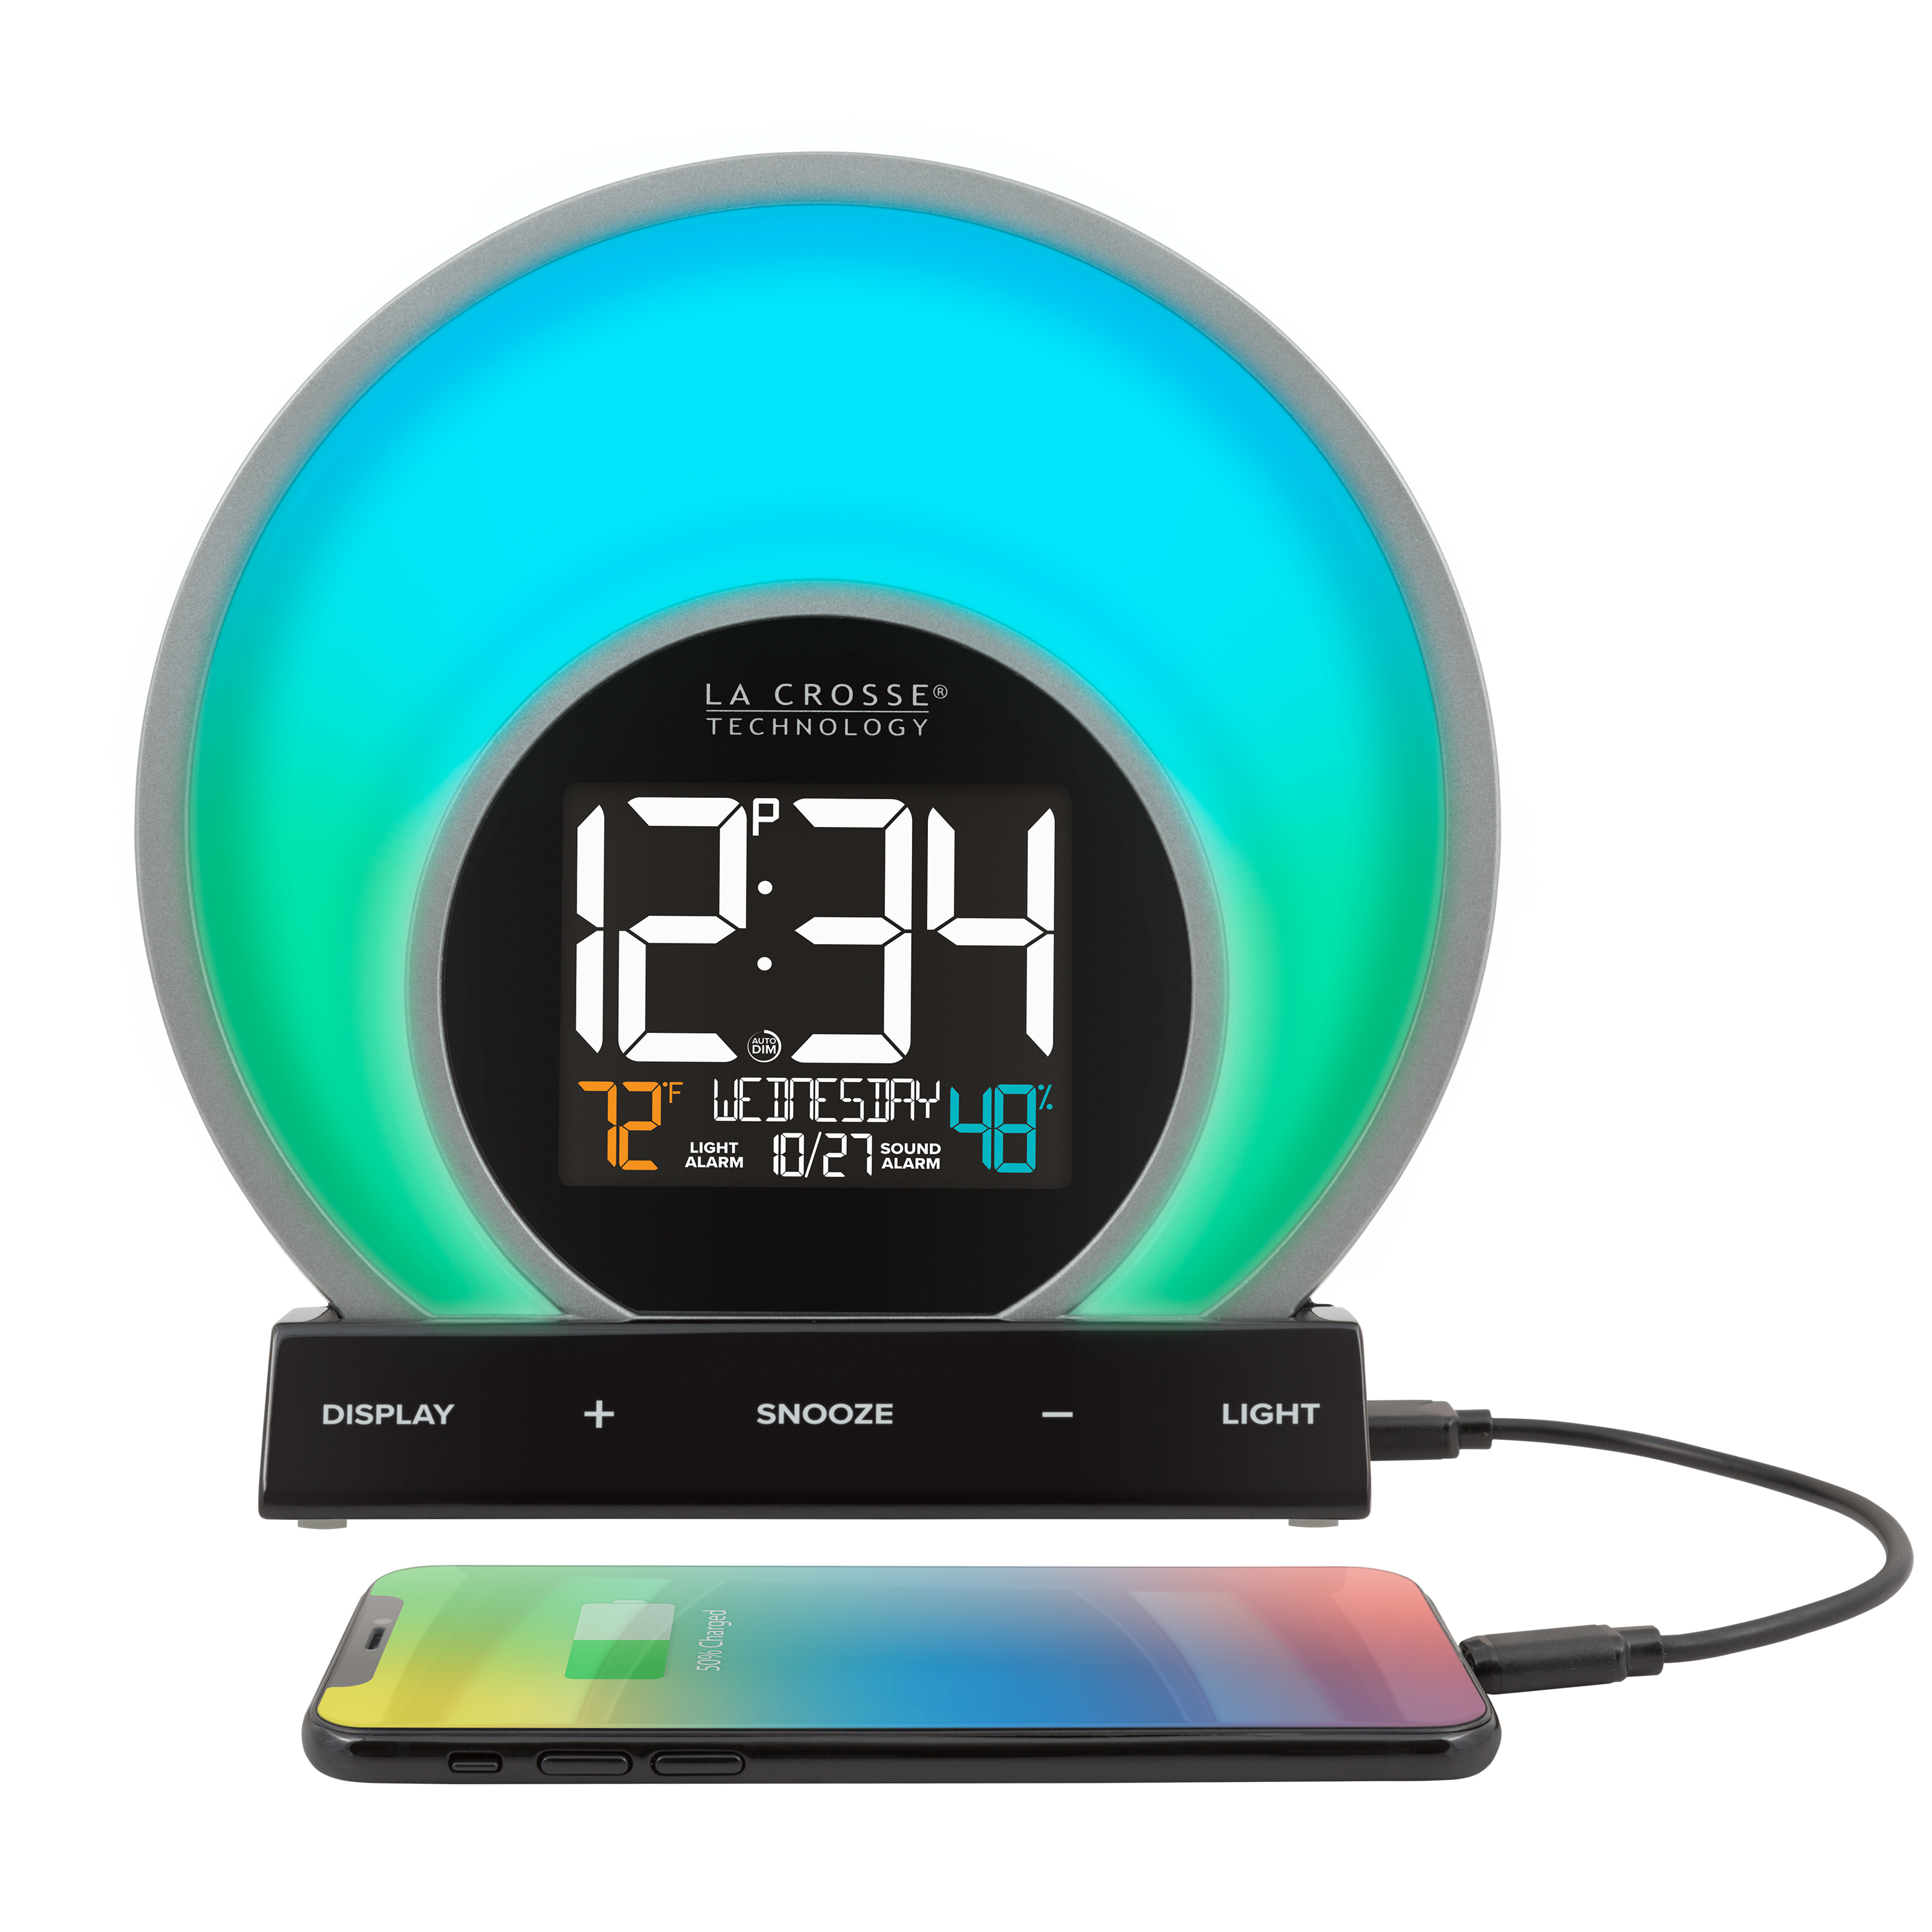 La Crosse Technology 6.81" x 2.69" Digital Soluna Sunrise & Sunset LCD Light Alarm Clock with USB port, C80994 - image 1 of 8